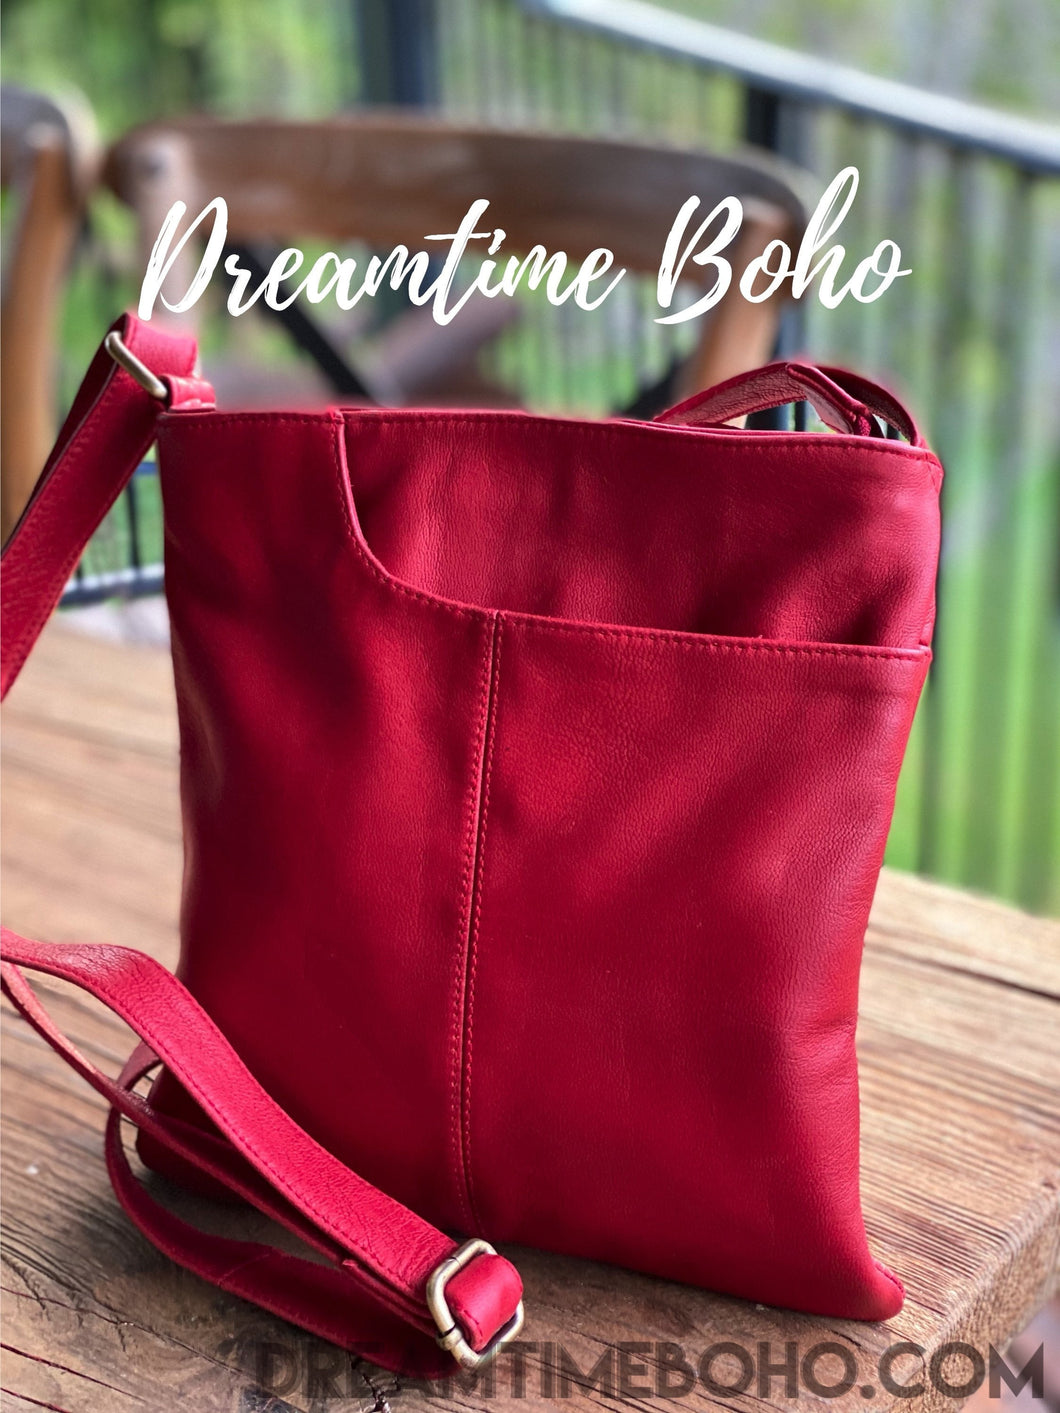 Dreamtime Boho Bags